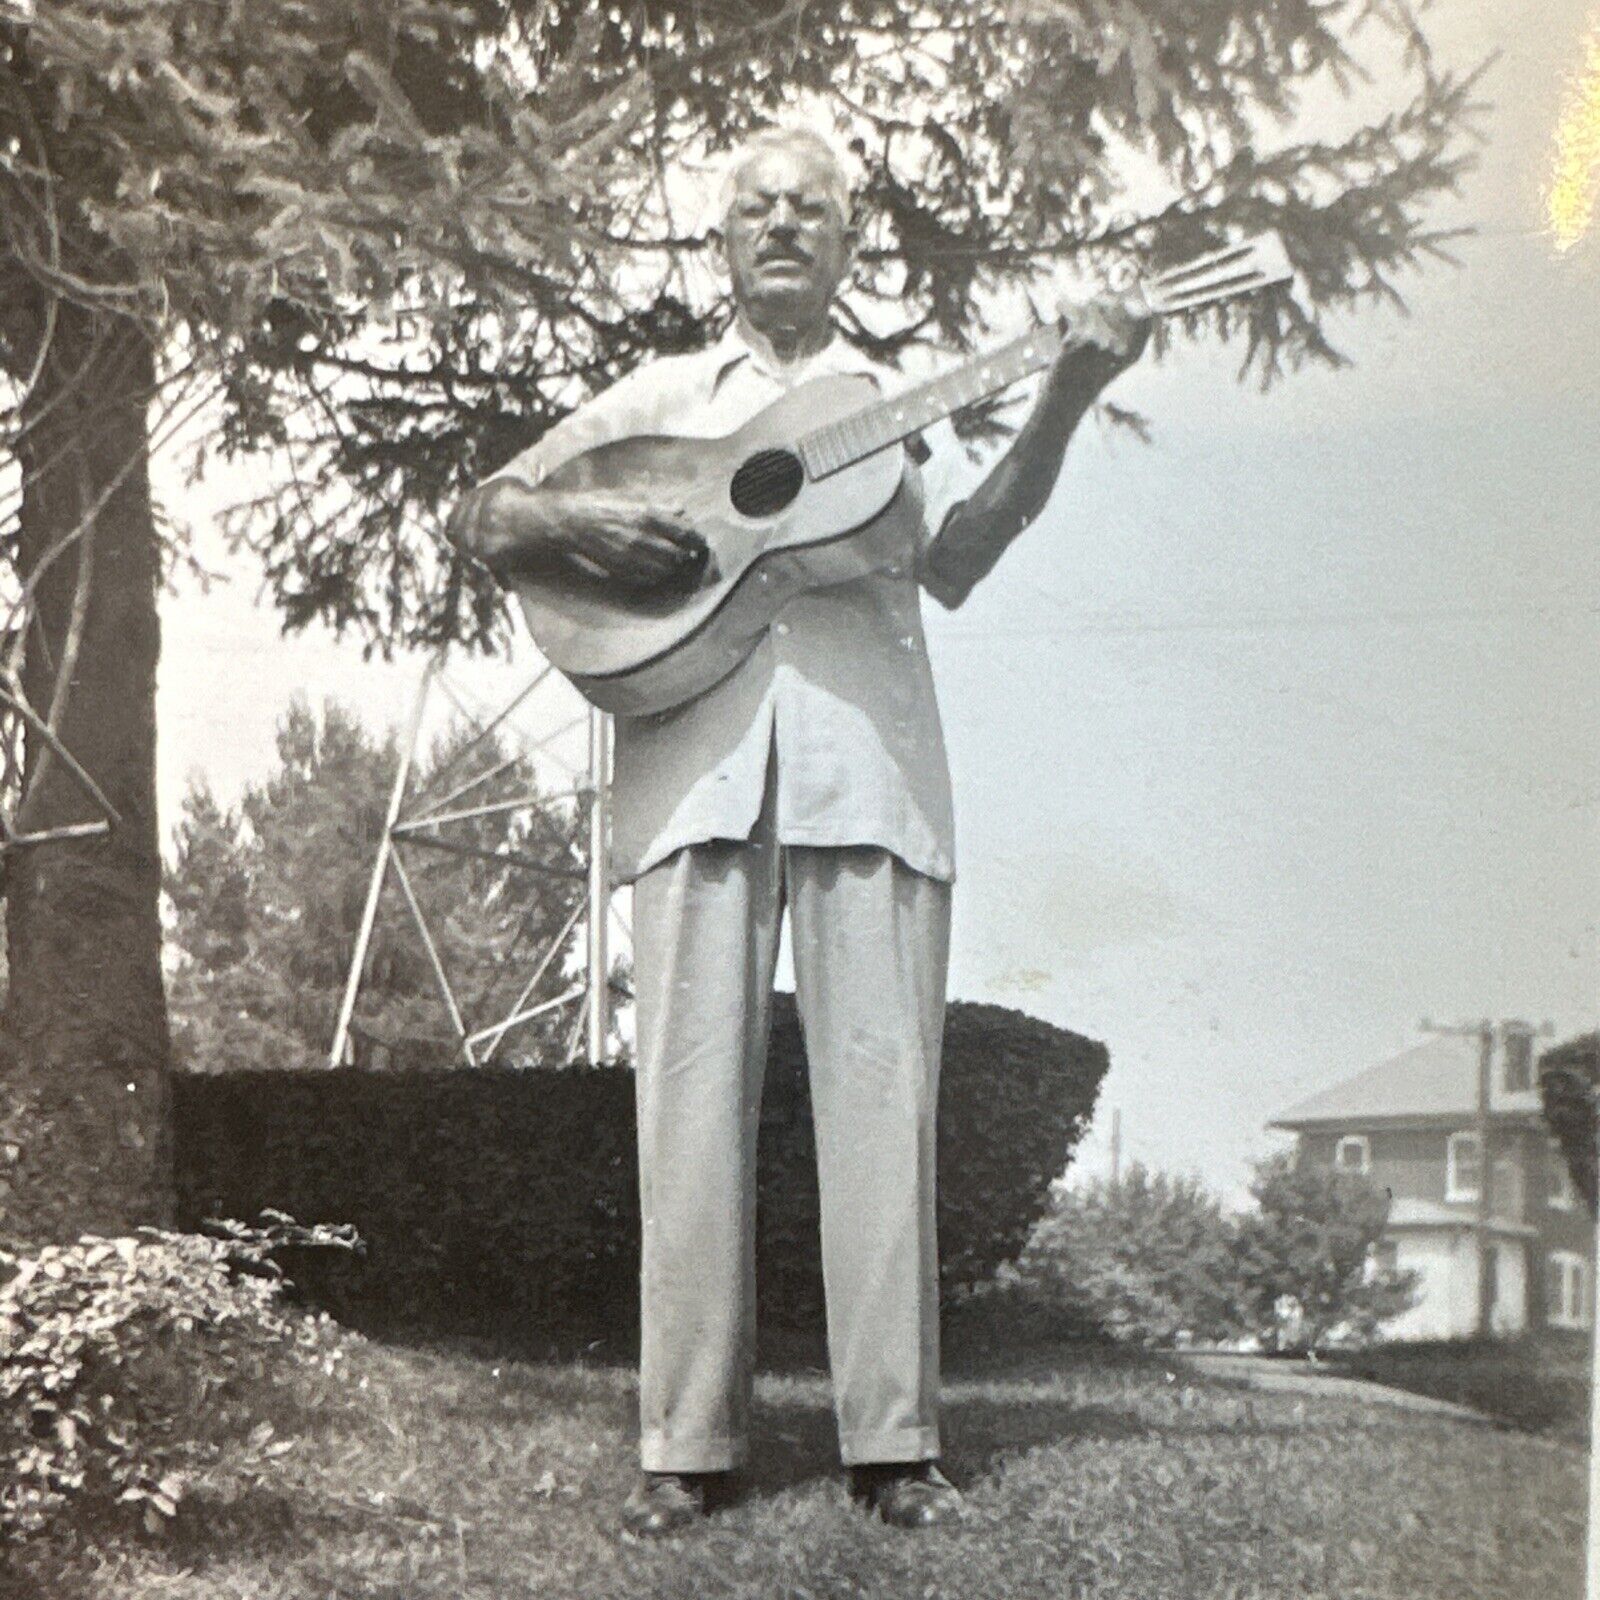 VINTAGE PHOTO Older Man Playing Acoustic Guitar Serenade Original Snapshot